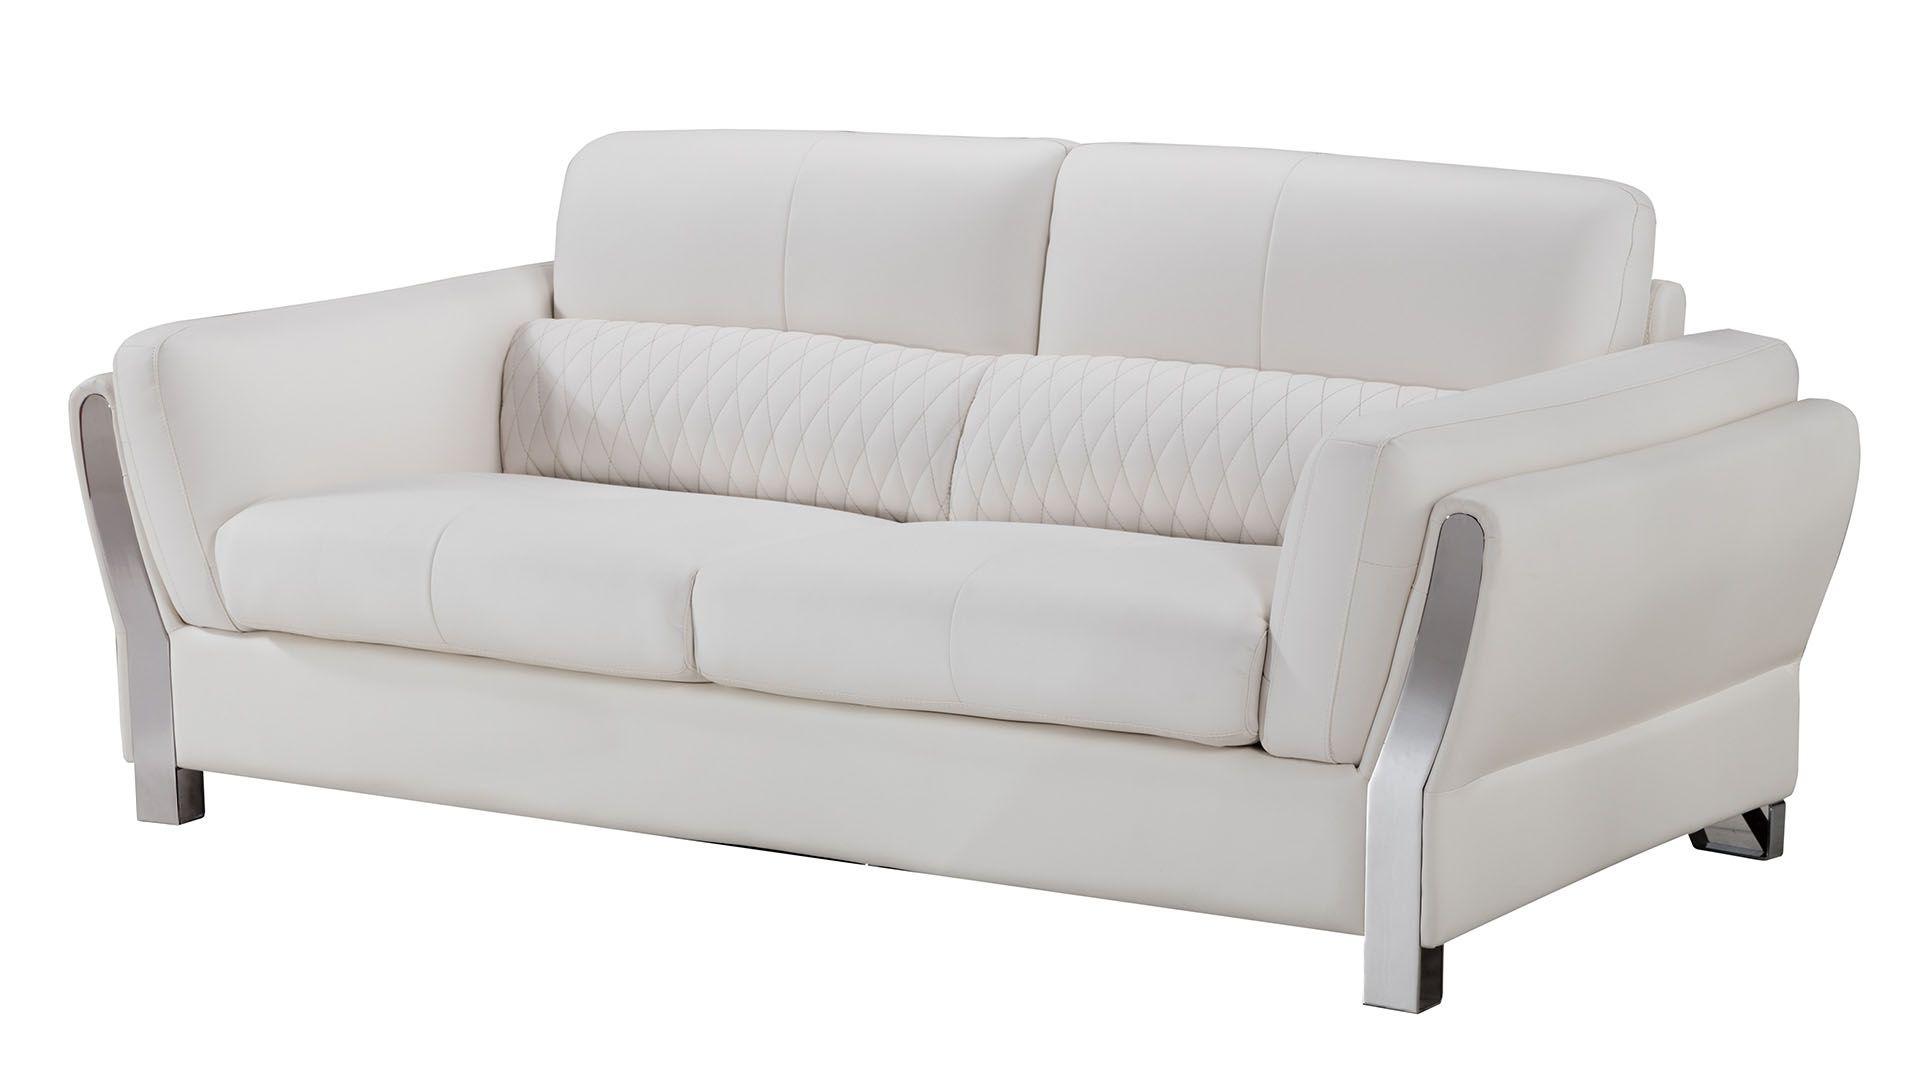 

    
White Microfiber Leather Sofa Set 3Pcs AE690-W American Eagle Contemporary
